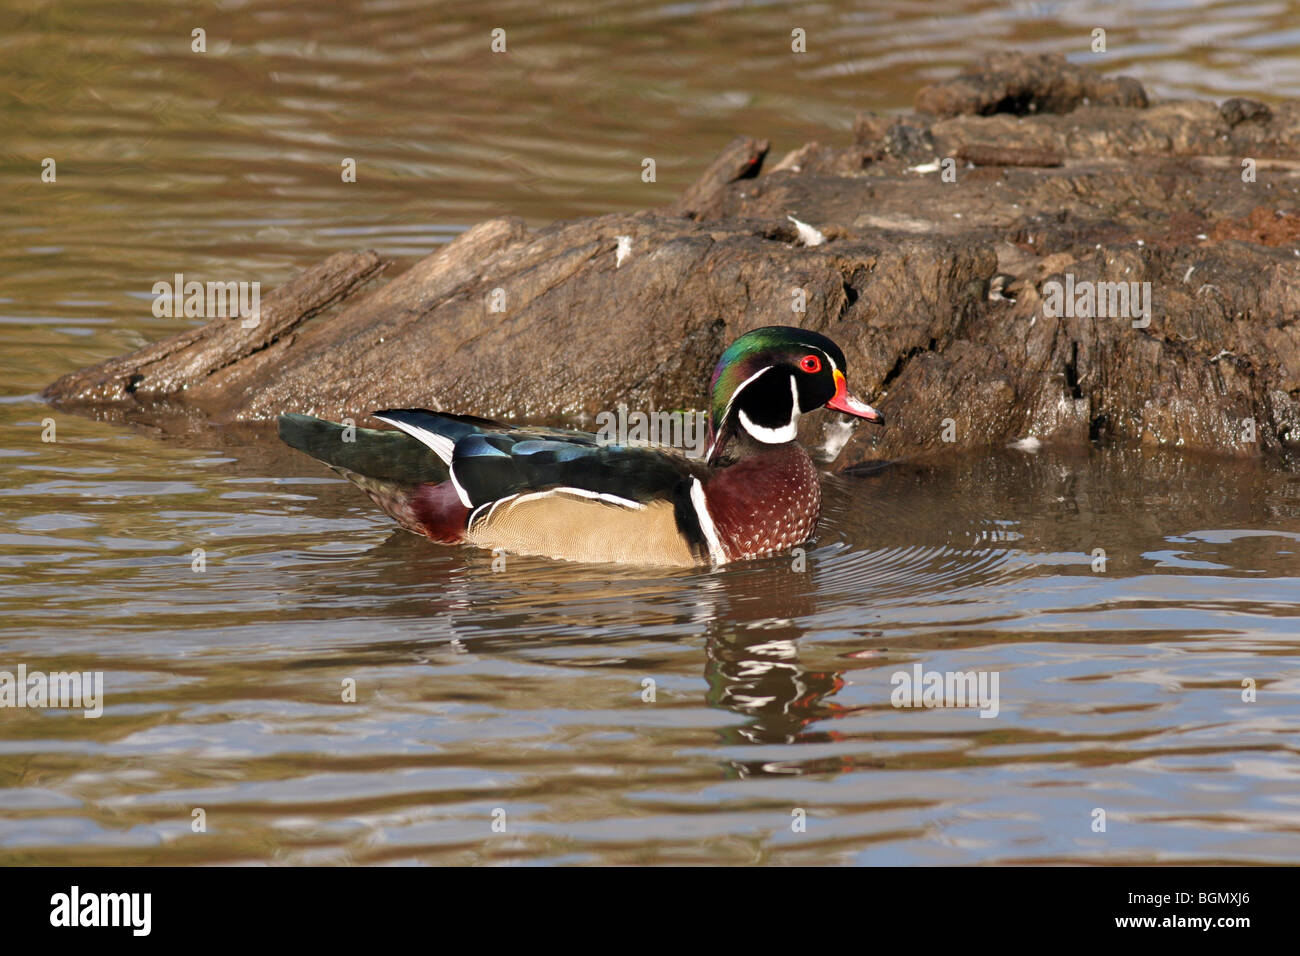 Wood duck swimming by tree stump Stock Photo